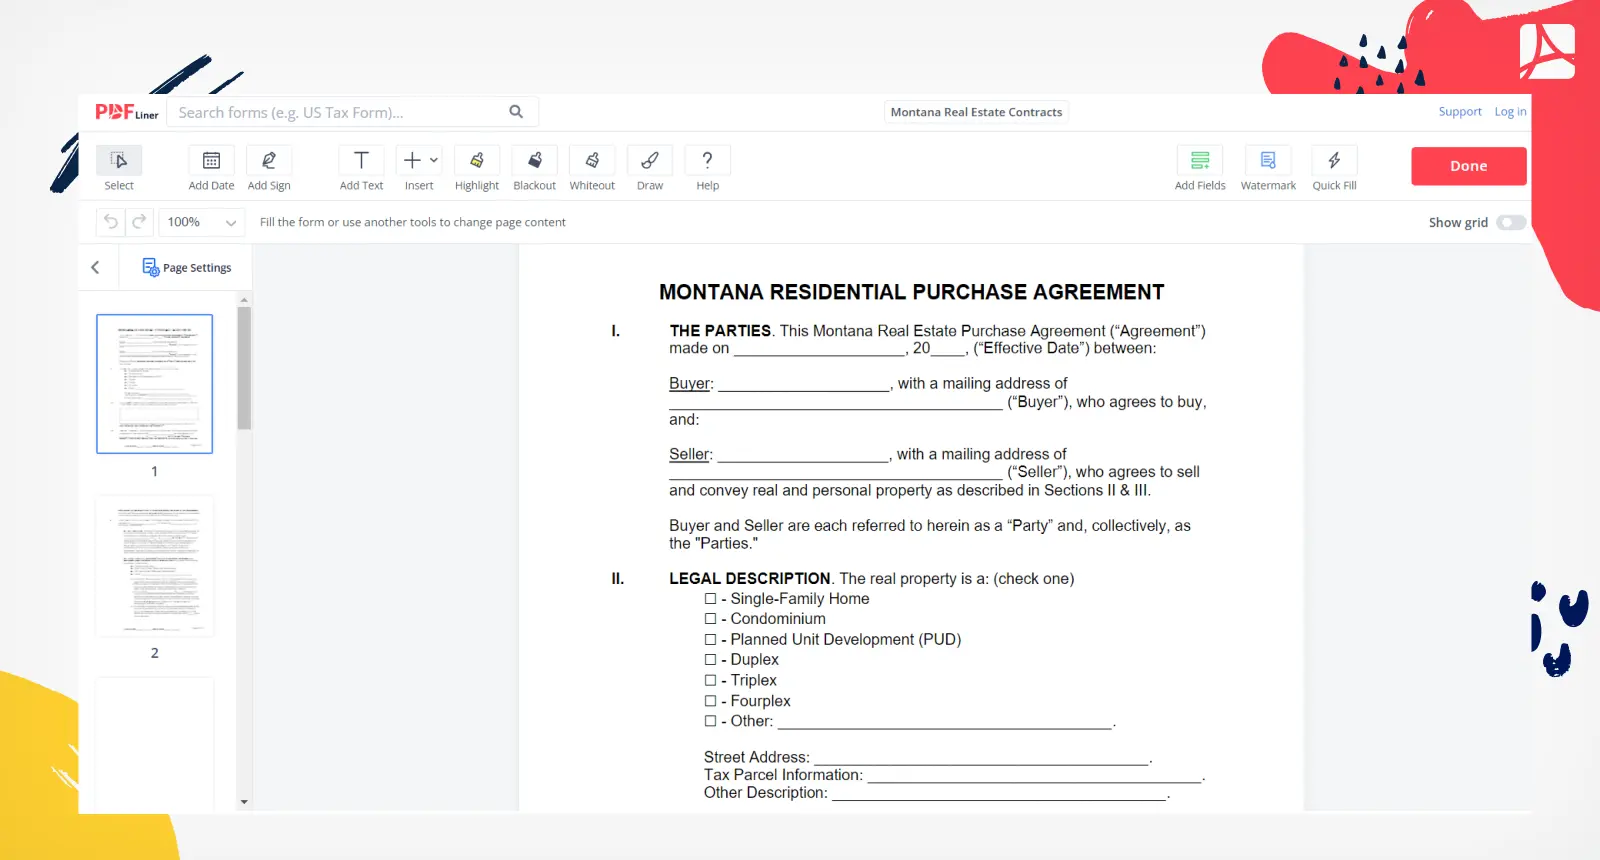 Montana Real Estate Contract Form Screenshot